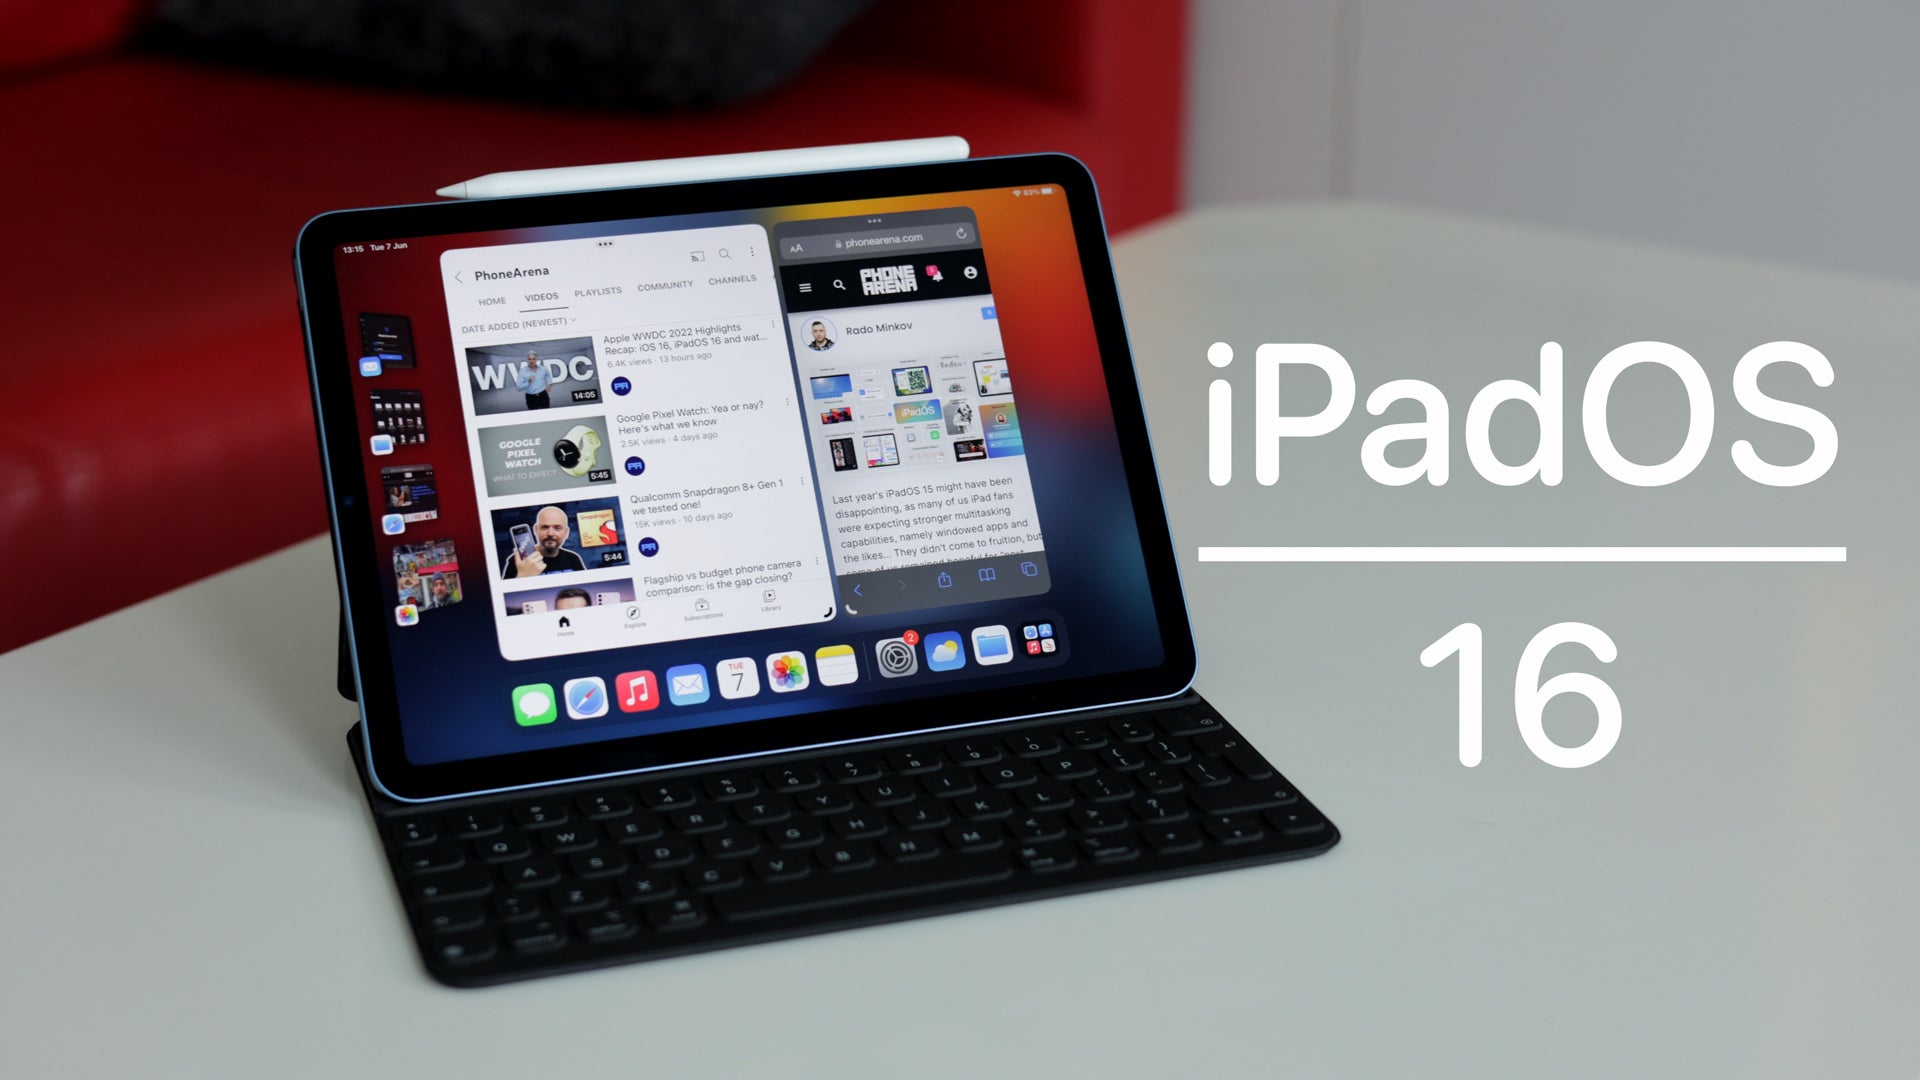 iPad Air 2022에서 실행되는 iPadOS 16 베타 버전, Stage Manager 멀티태스킹 기능 소개 - Apple의 차기 예산 2022년 iPad가 Android 태블릿(및 이미 작은 시장 점유율)에 큰 위협인 이유